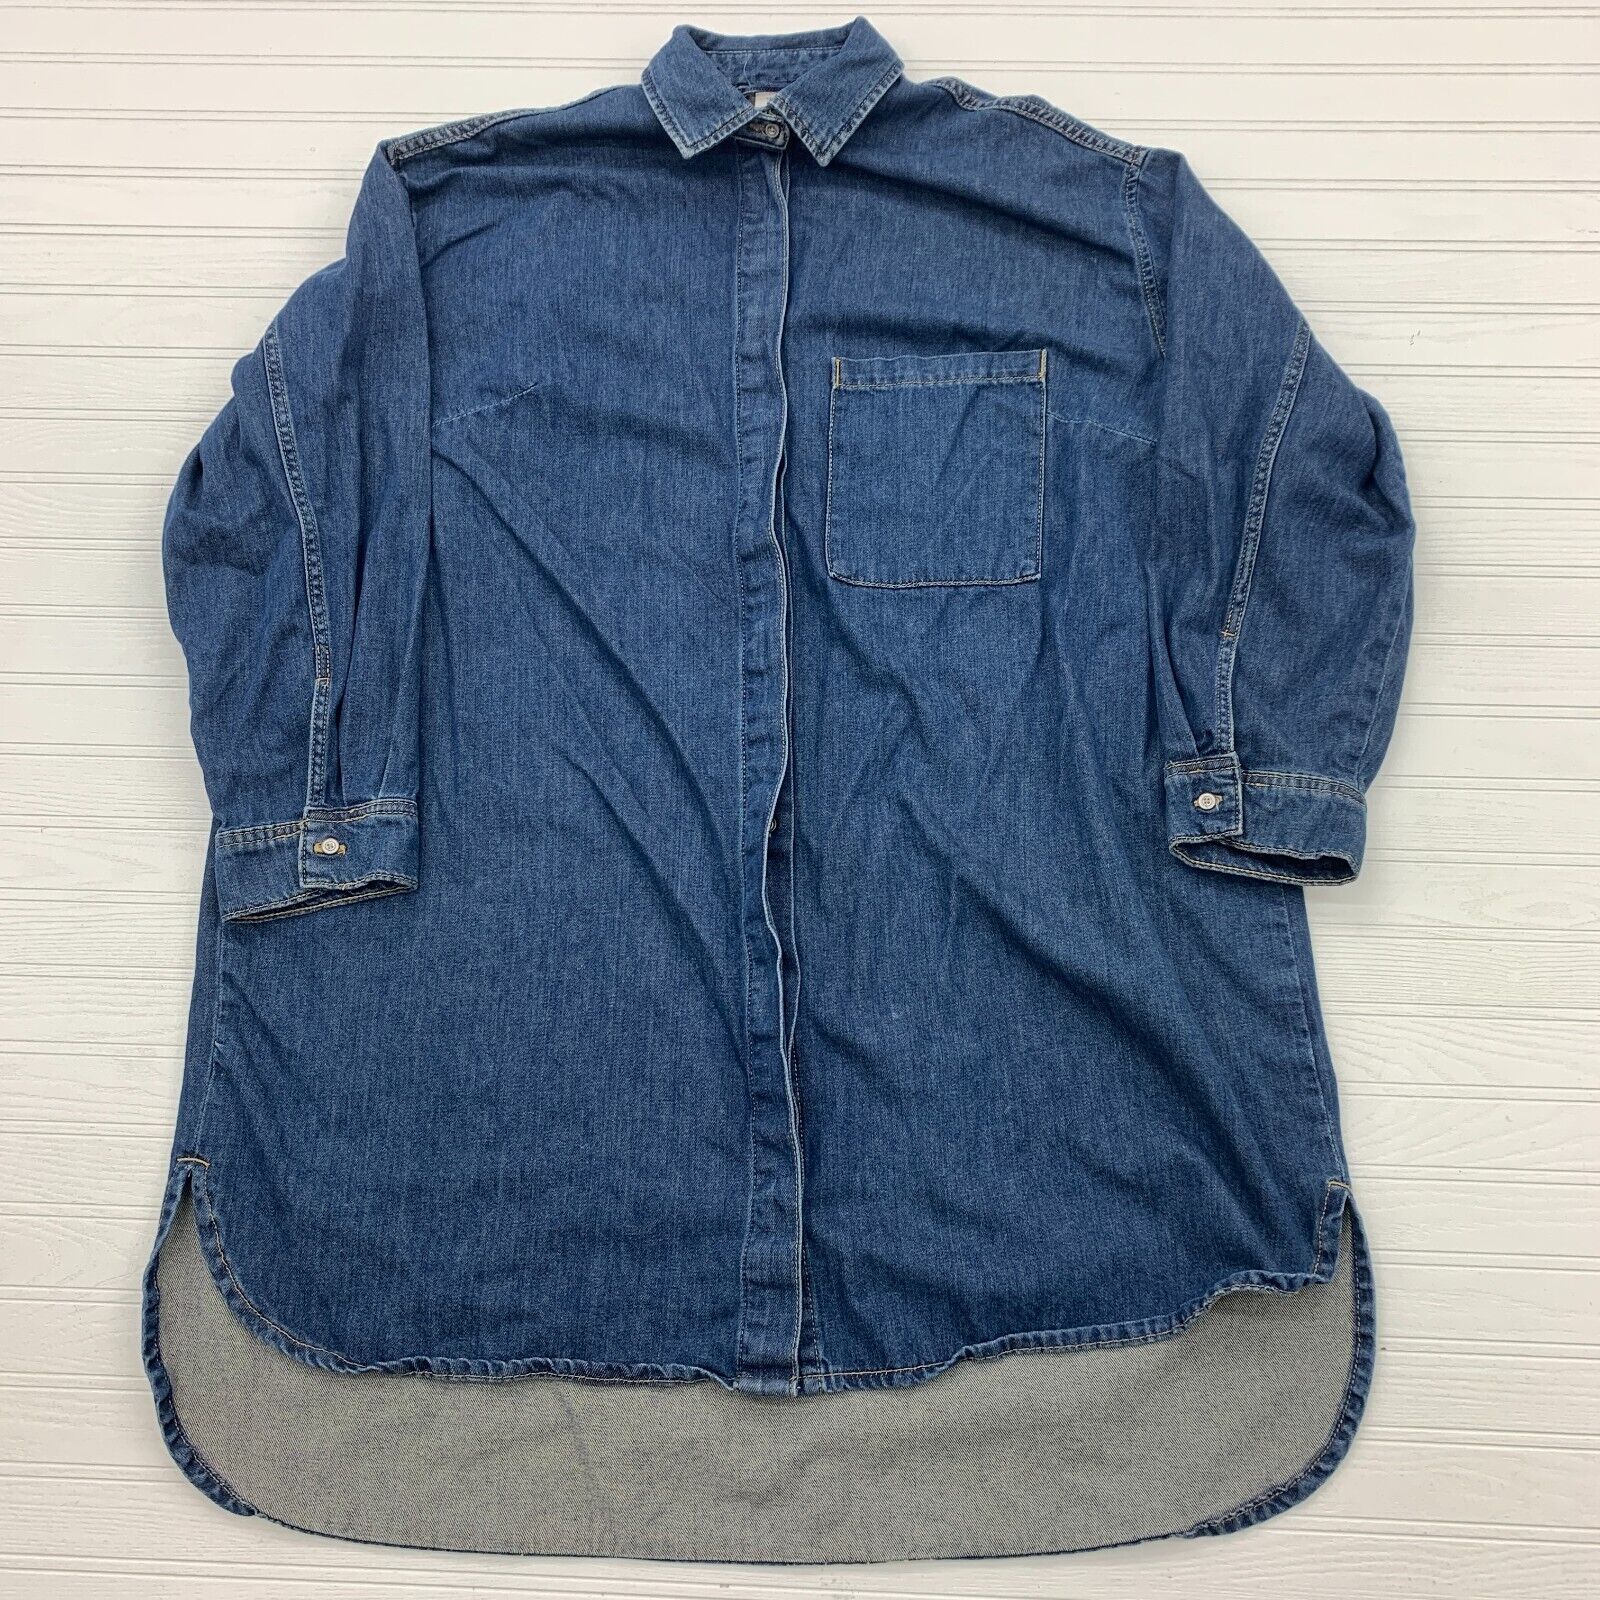 & Denim Plain Blank Single Pocket Dark Blue Button Up Shirt Adult Size XL